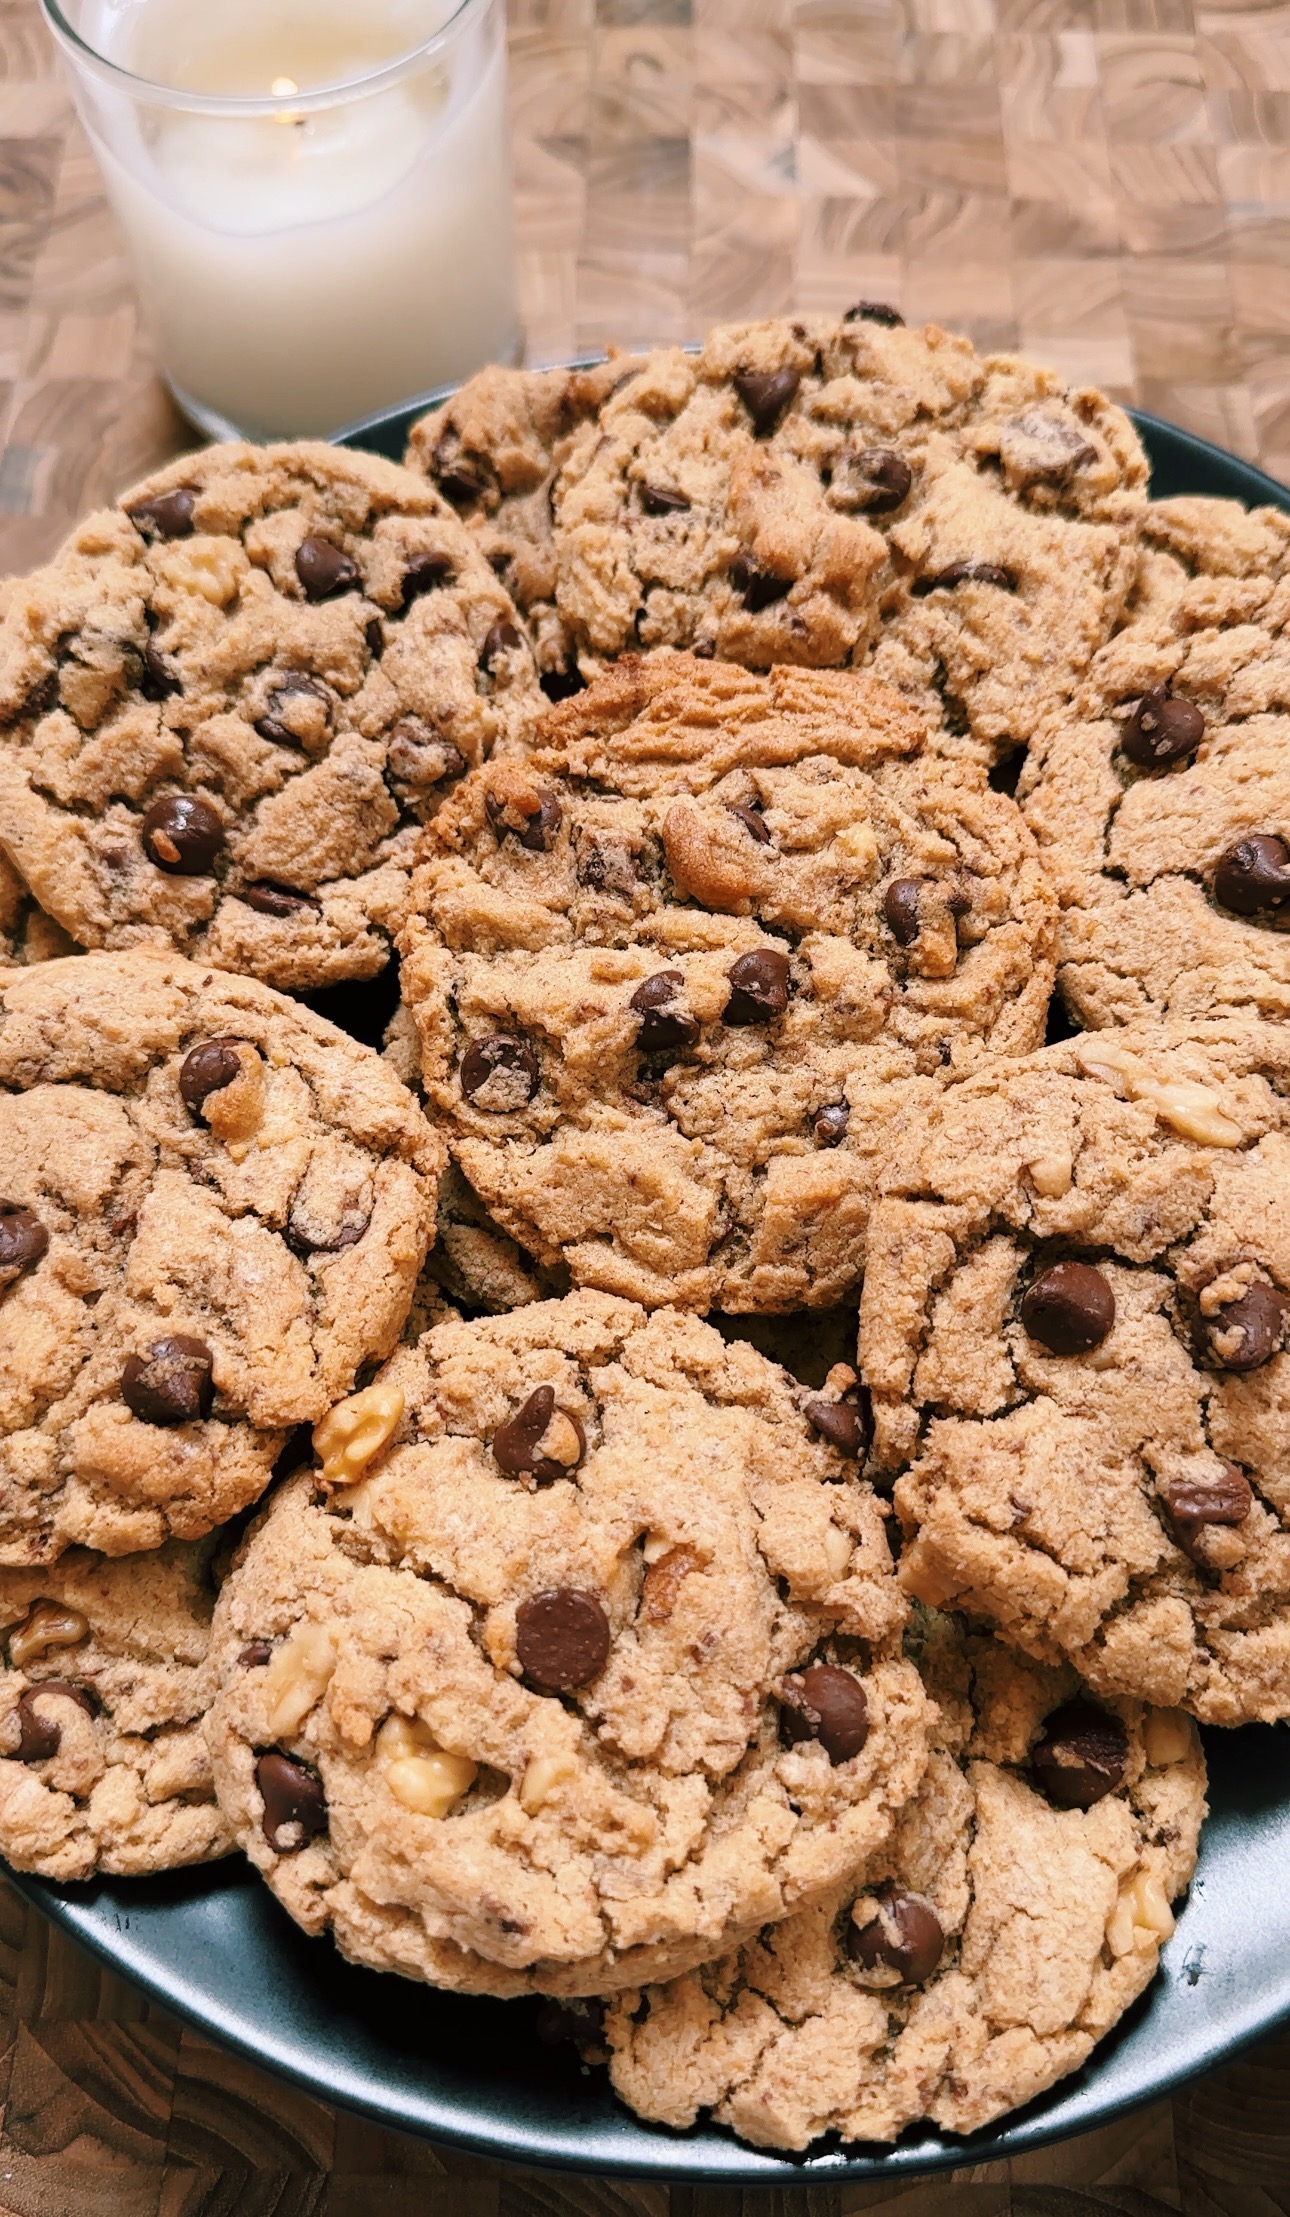 Neiman Marcus Cookies - Life, Love, and Good Food